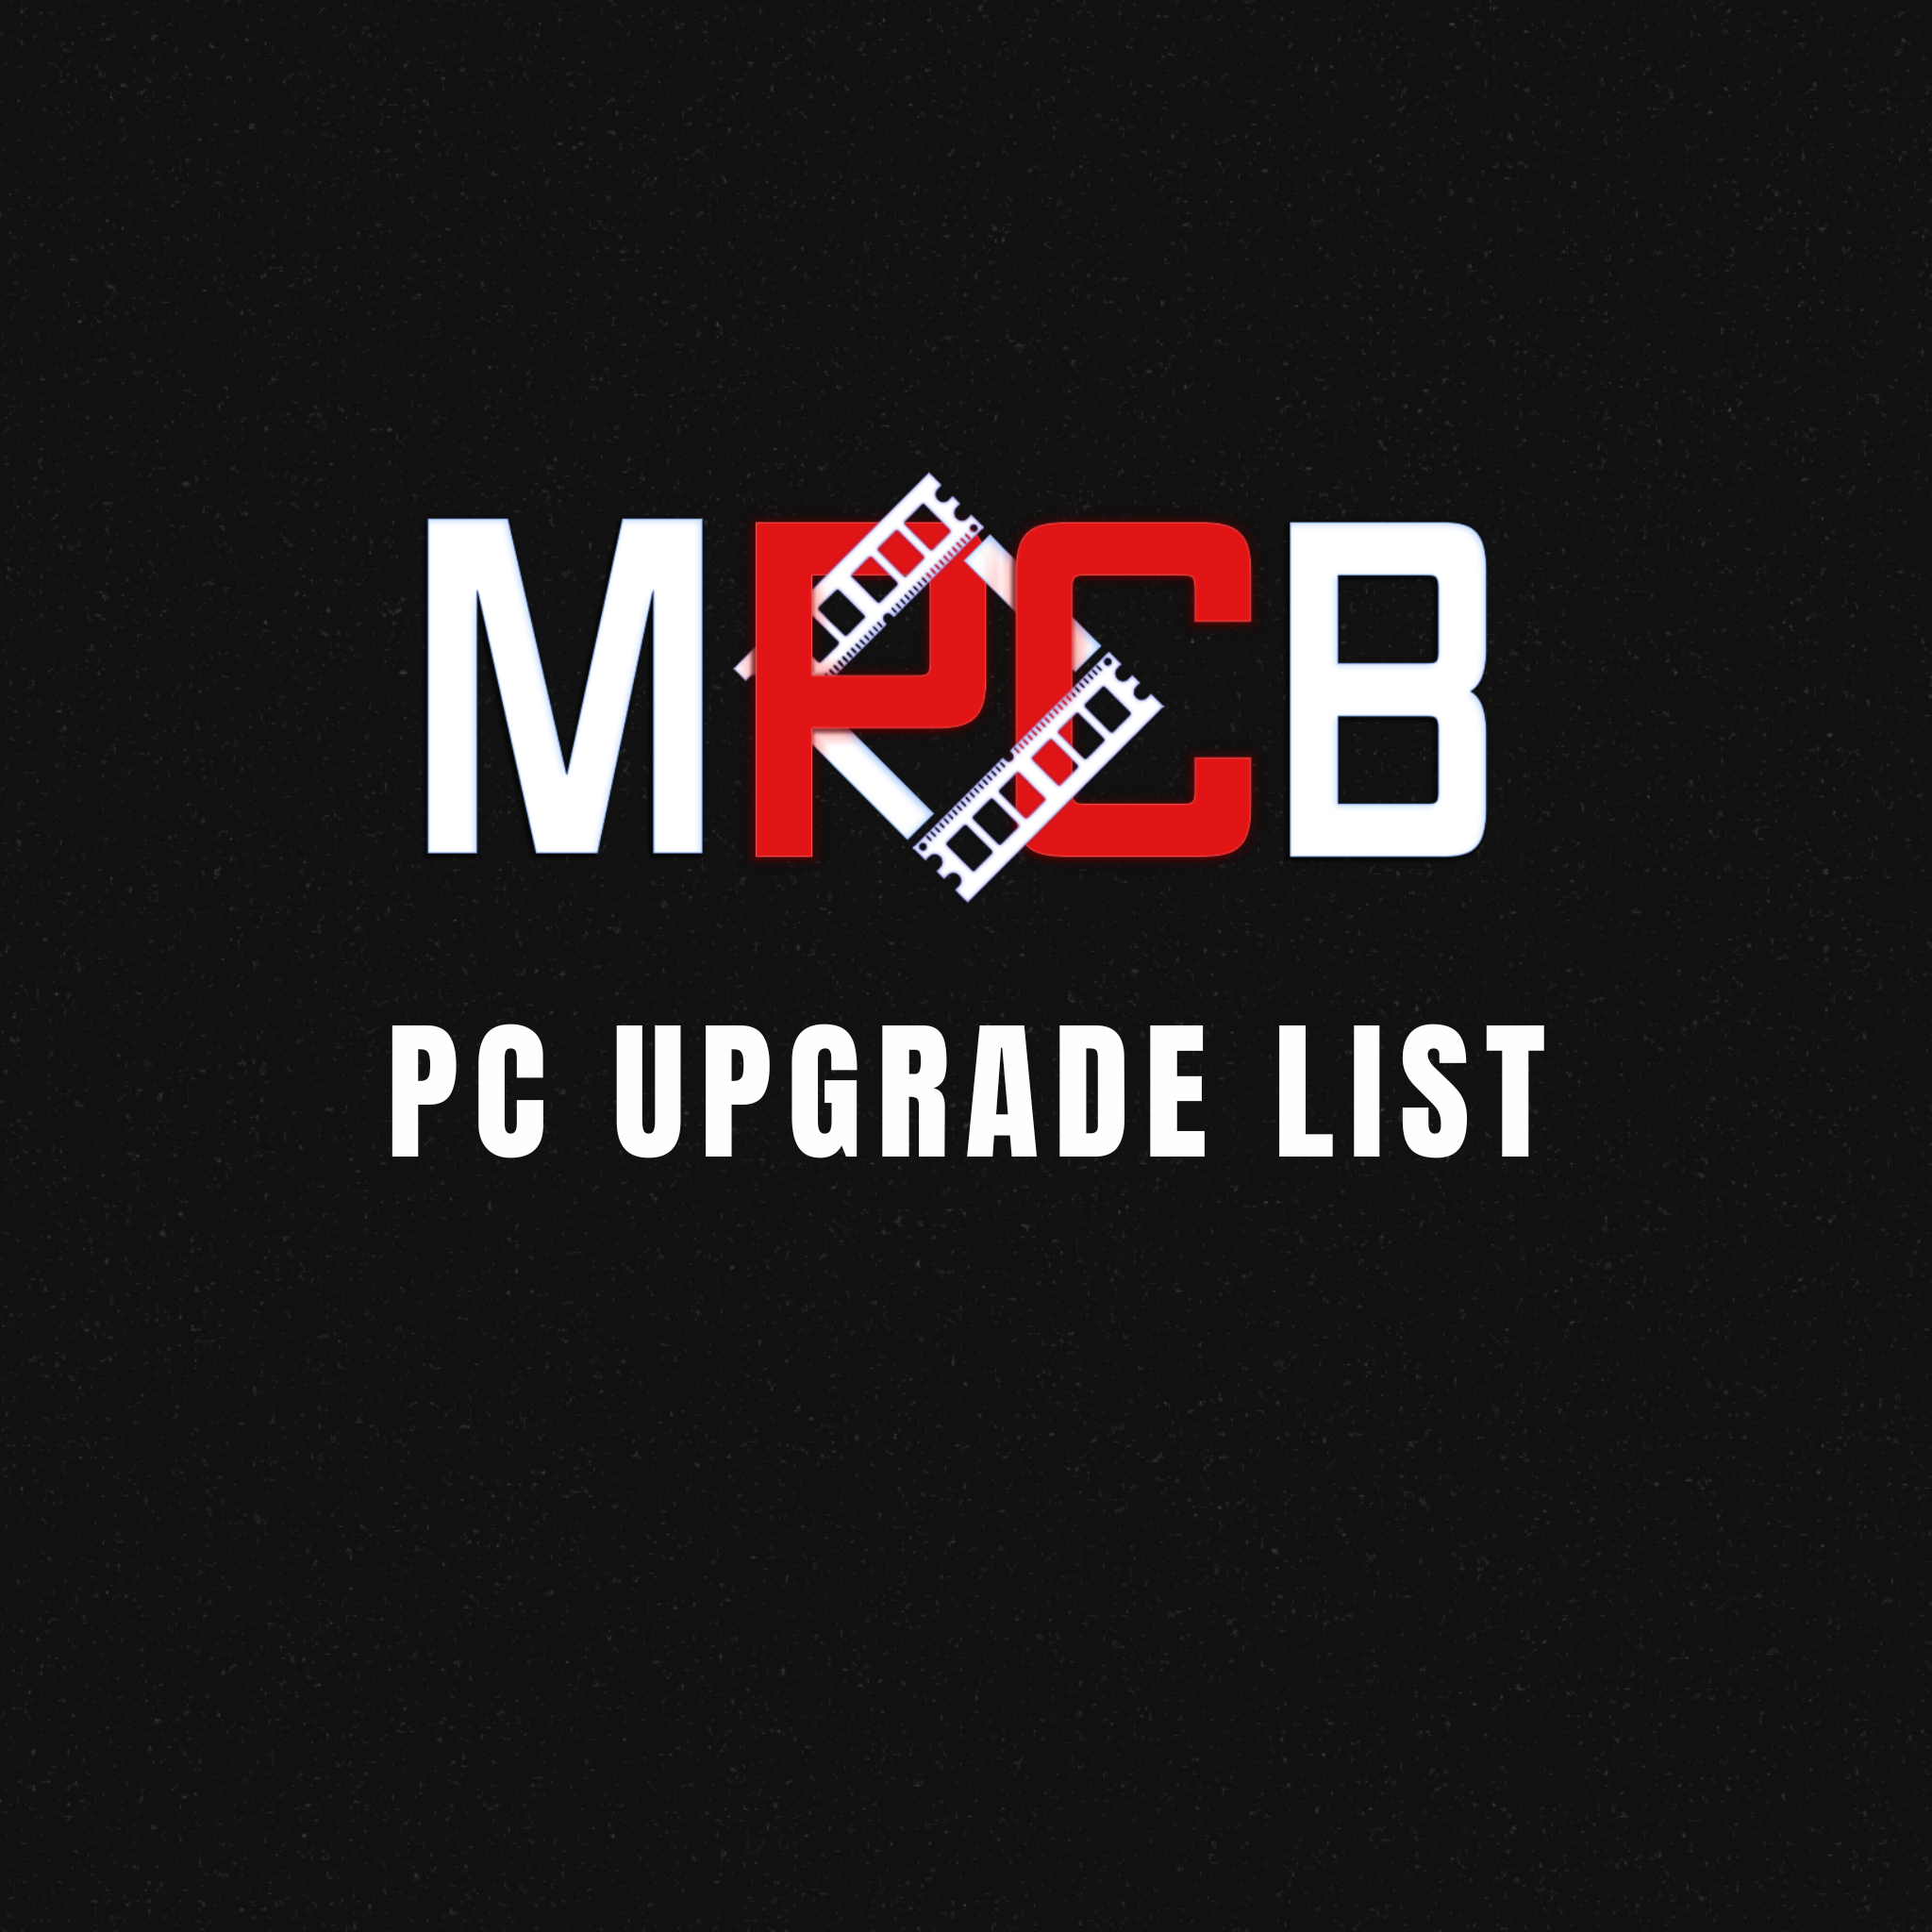 PC Upgrade List